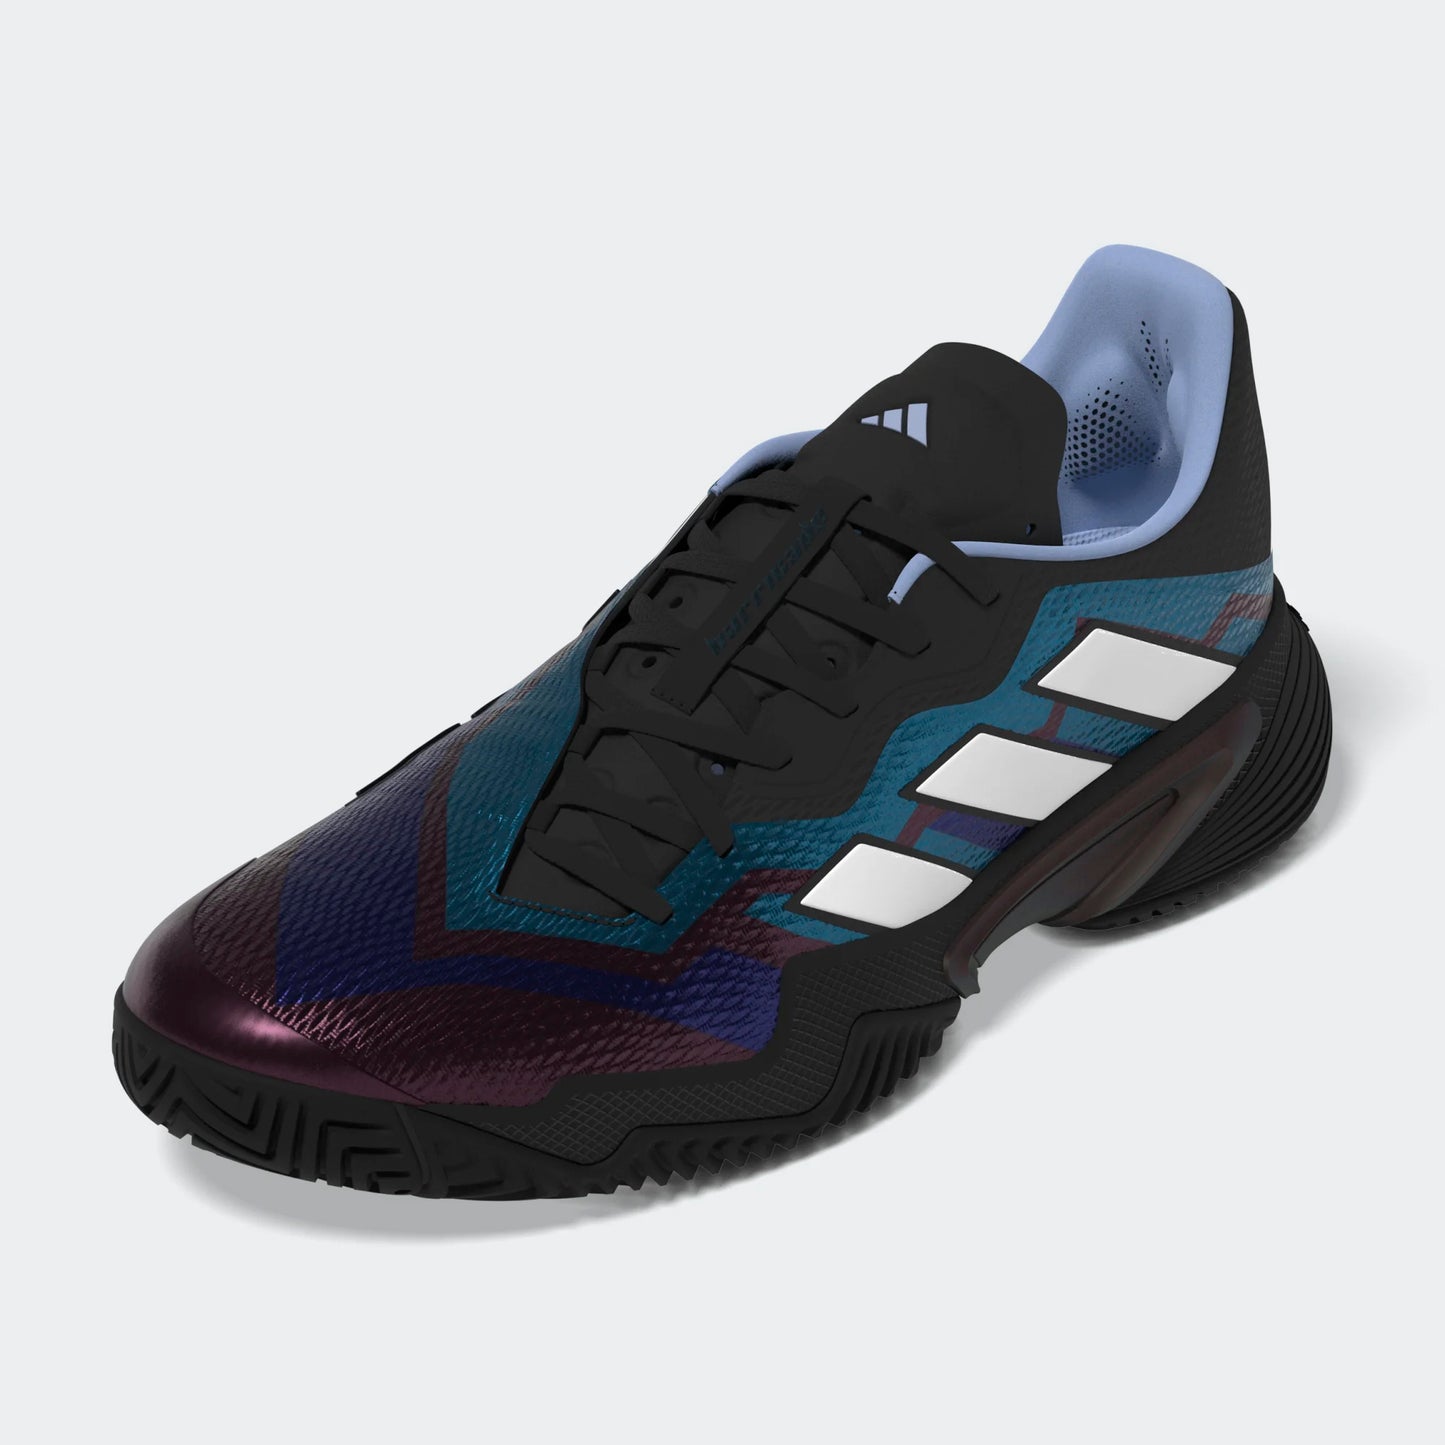 Adidas Men's Barricade Tennis Shoes, Size 11.5, Black/White/Blue